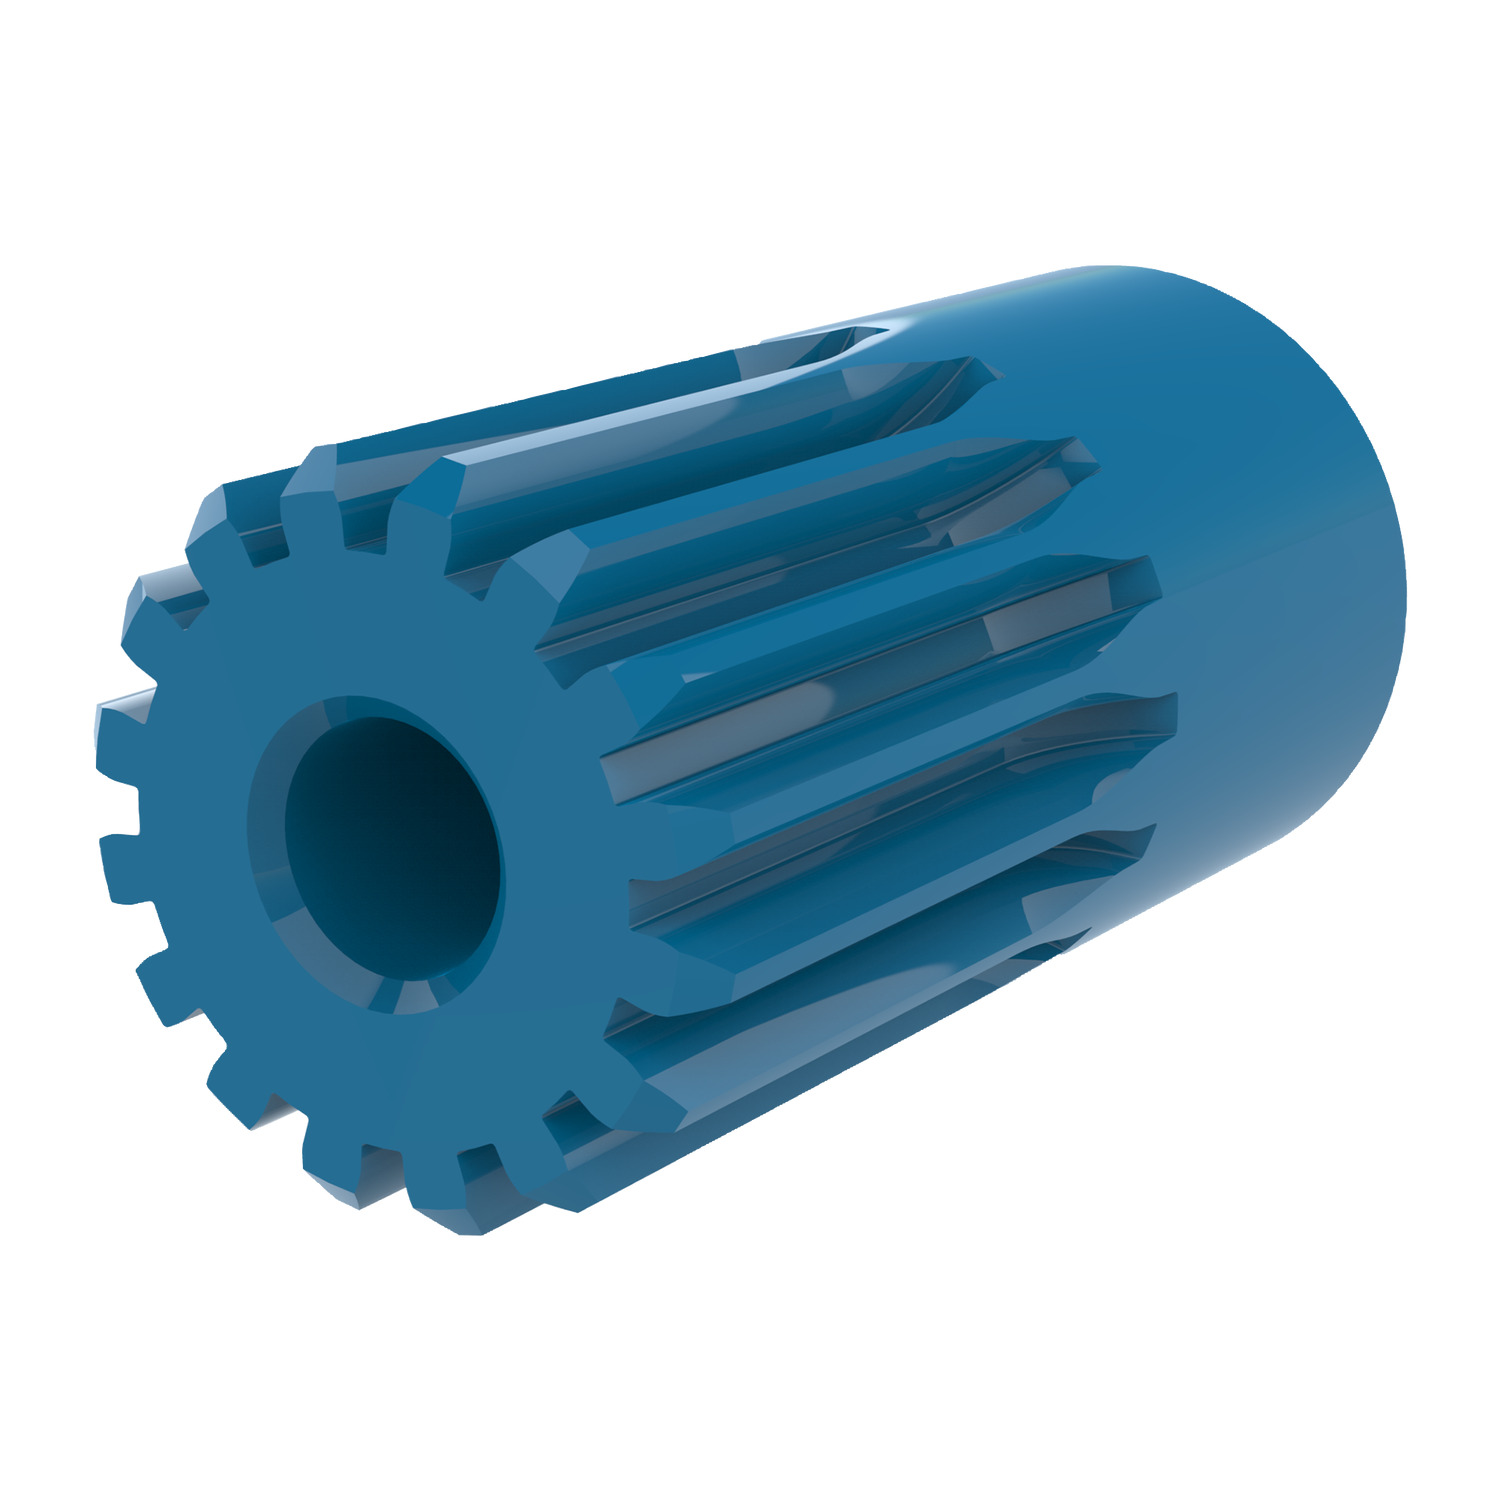 Product R5117, Spur Gears - Module 0.5 - Plastic blue polyacetal - 14-18 teeth / 